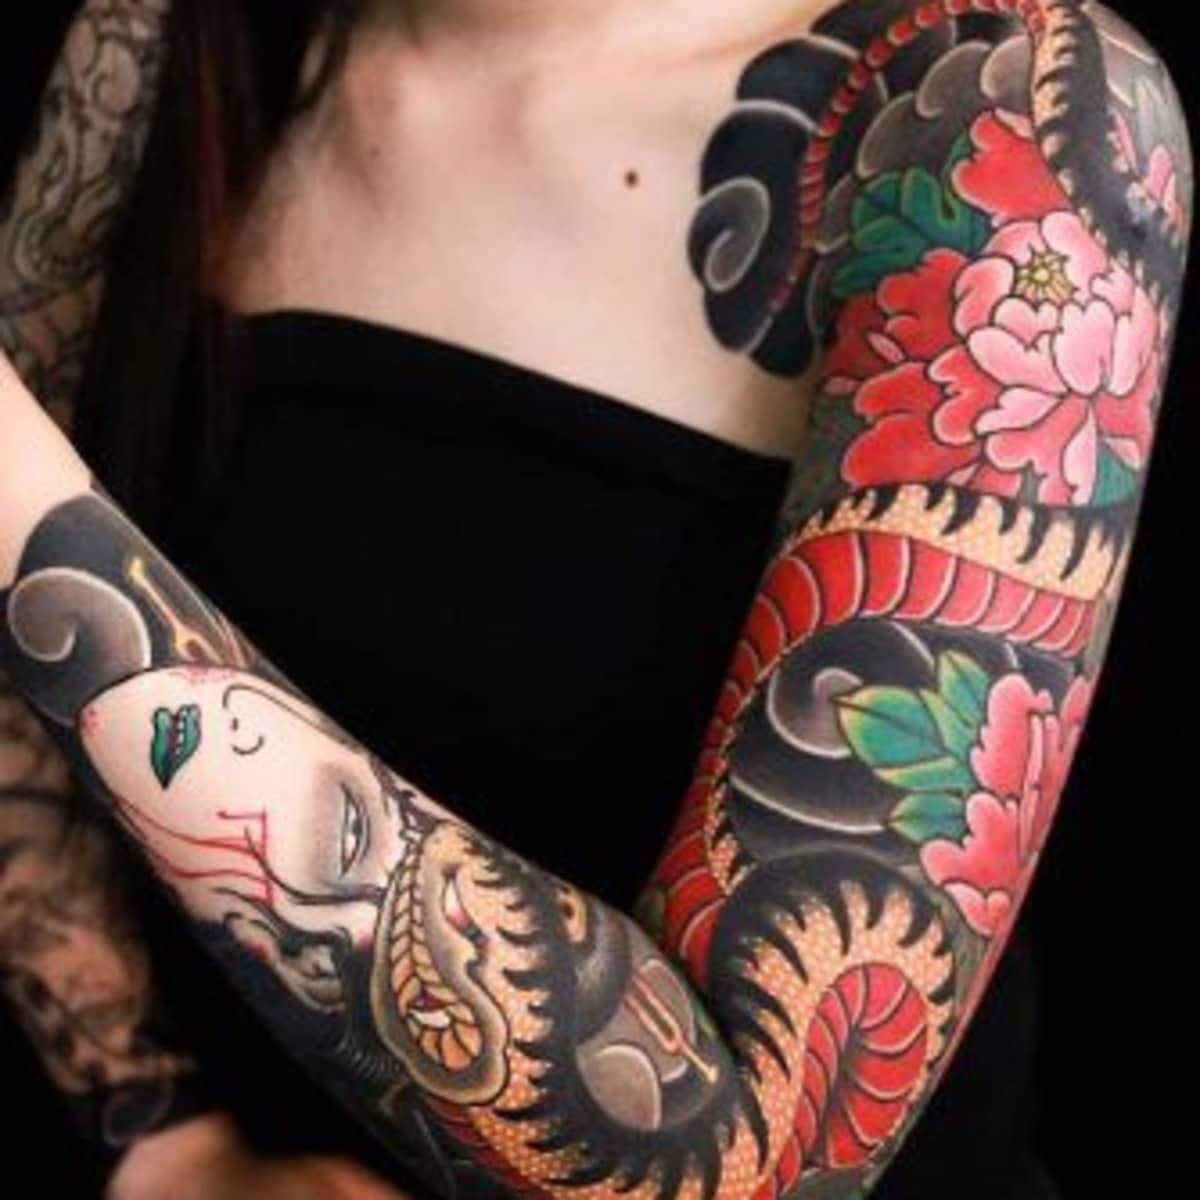 Dead Mans Hand Tattoo and Piercing  A fun blackwork snake oroboros design  by Rob  Facebook